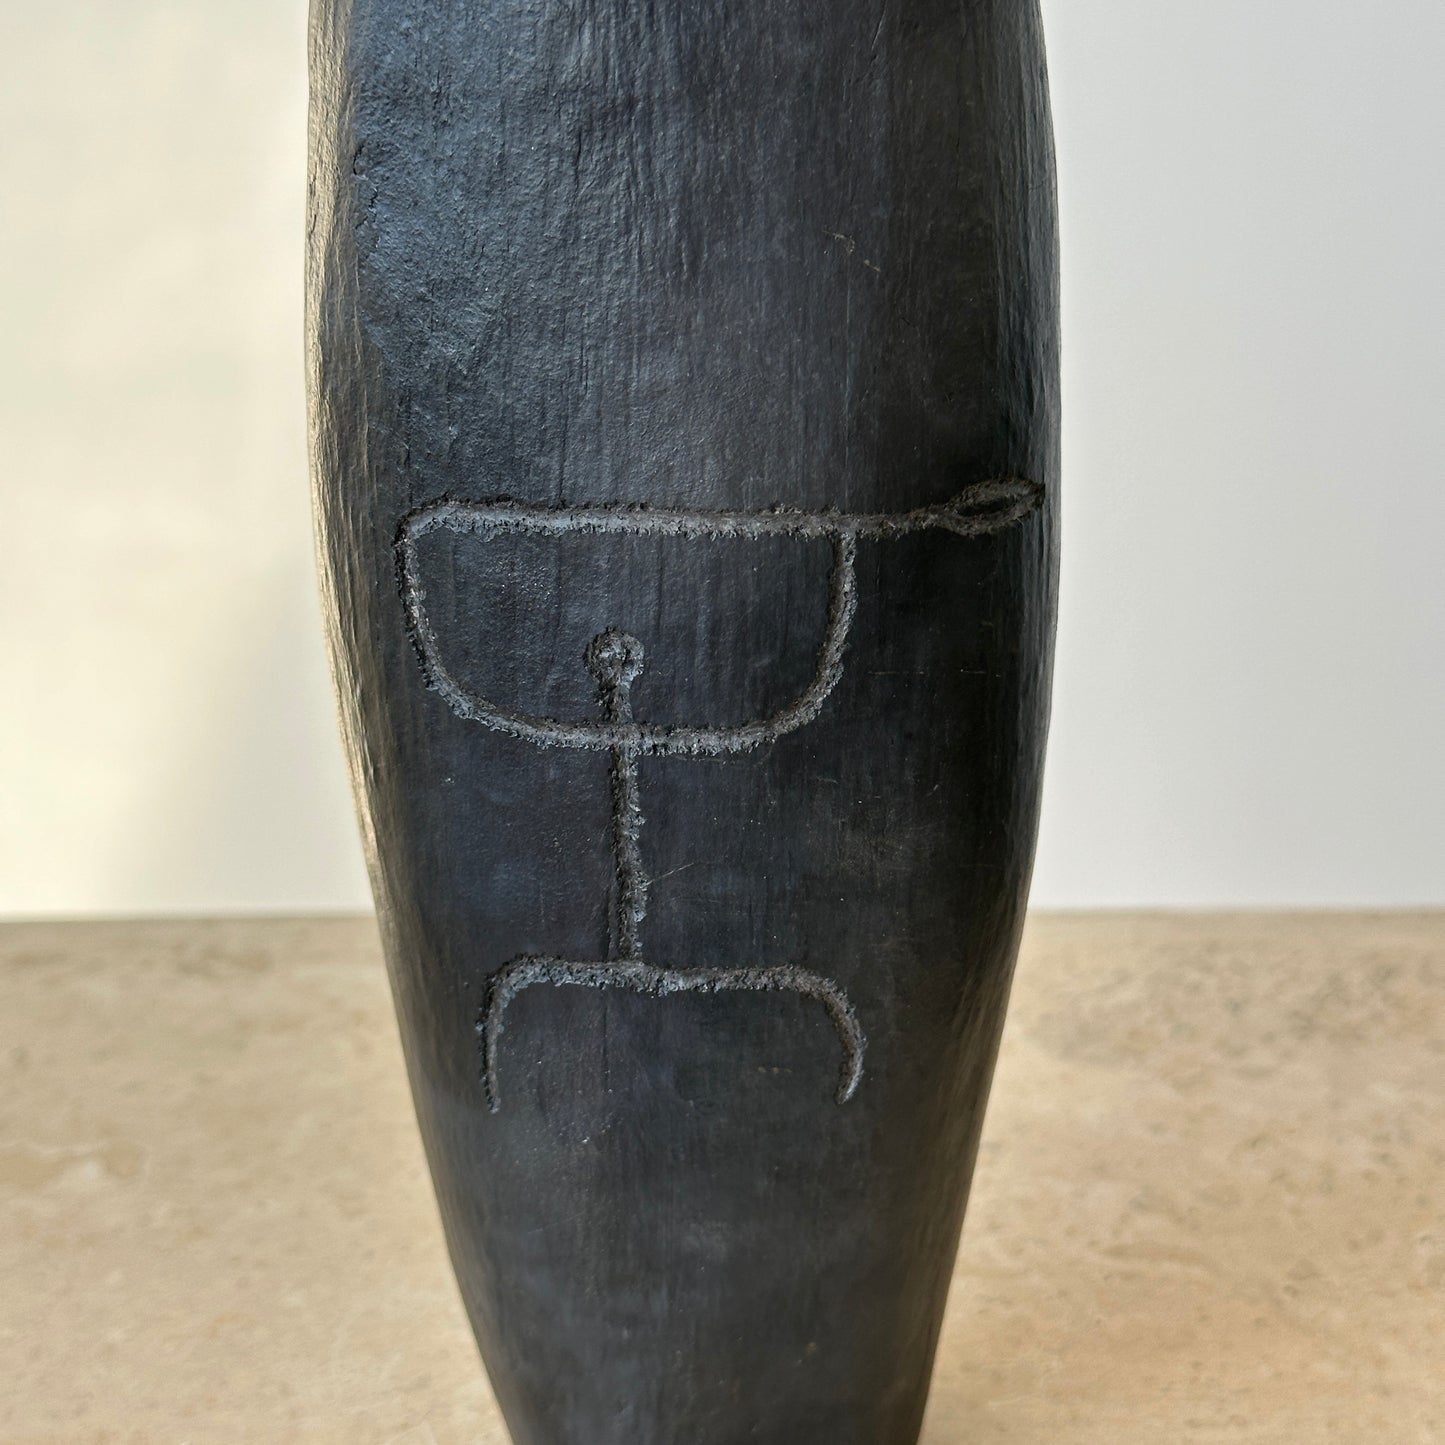 Raku-fired Small Vase